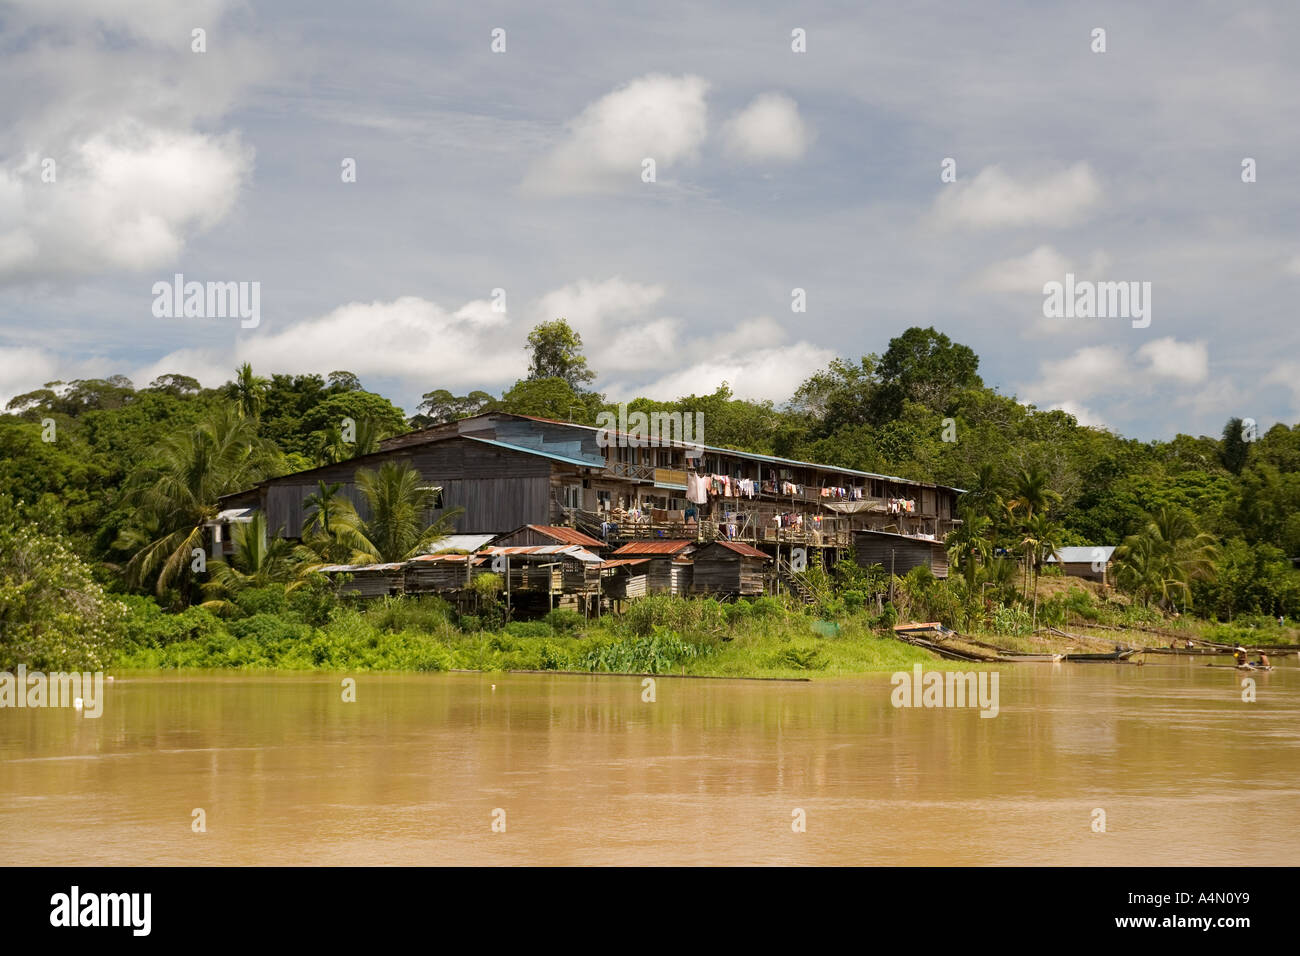 Malaysia Borneo Sarawak Rejang River am Flussufer Langhaus oben Pelagus Stromschnellen Stockfoto